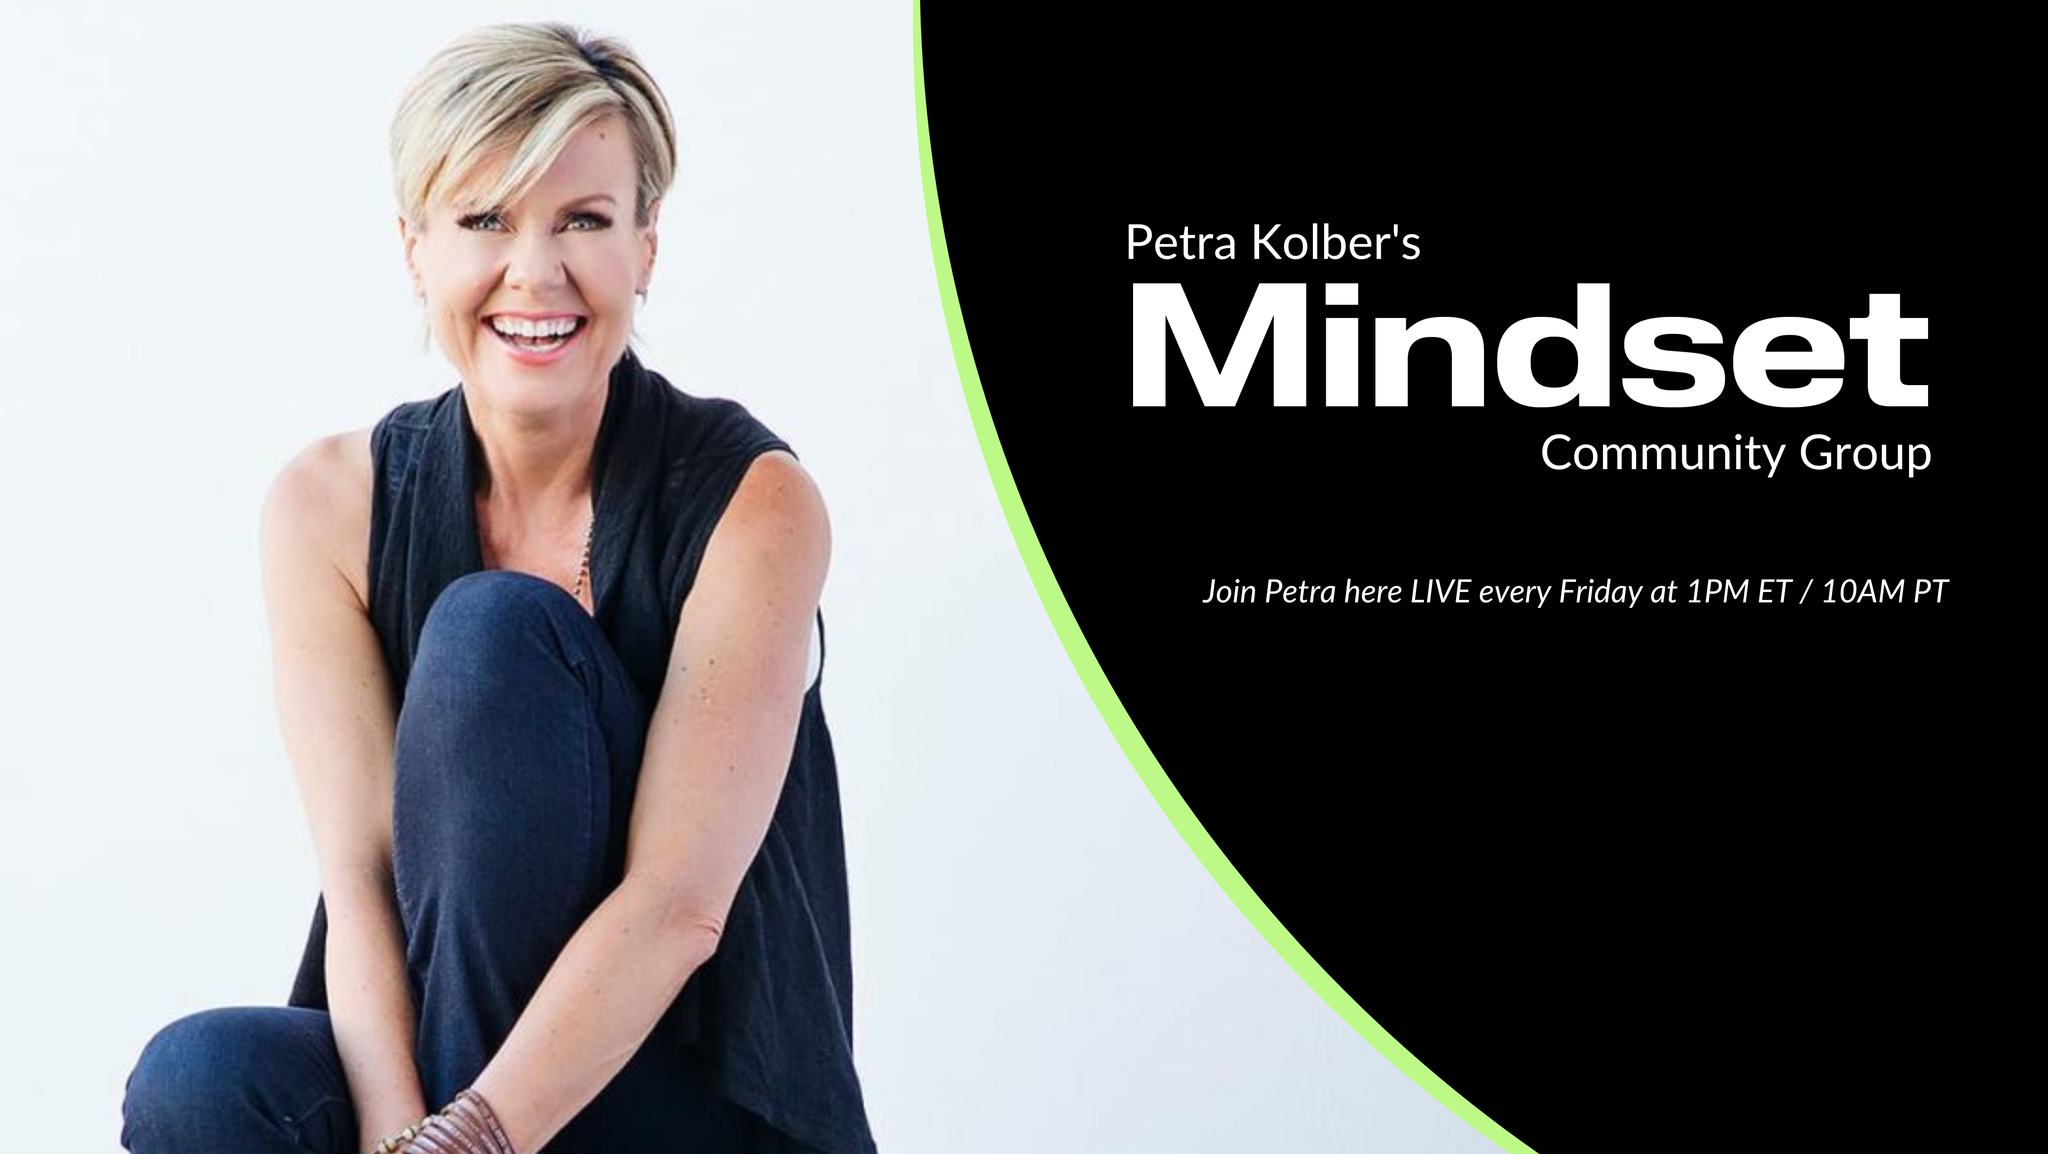 Petra Kolber - VP of Personal Development and Mindset